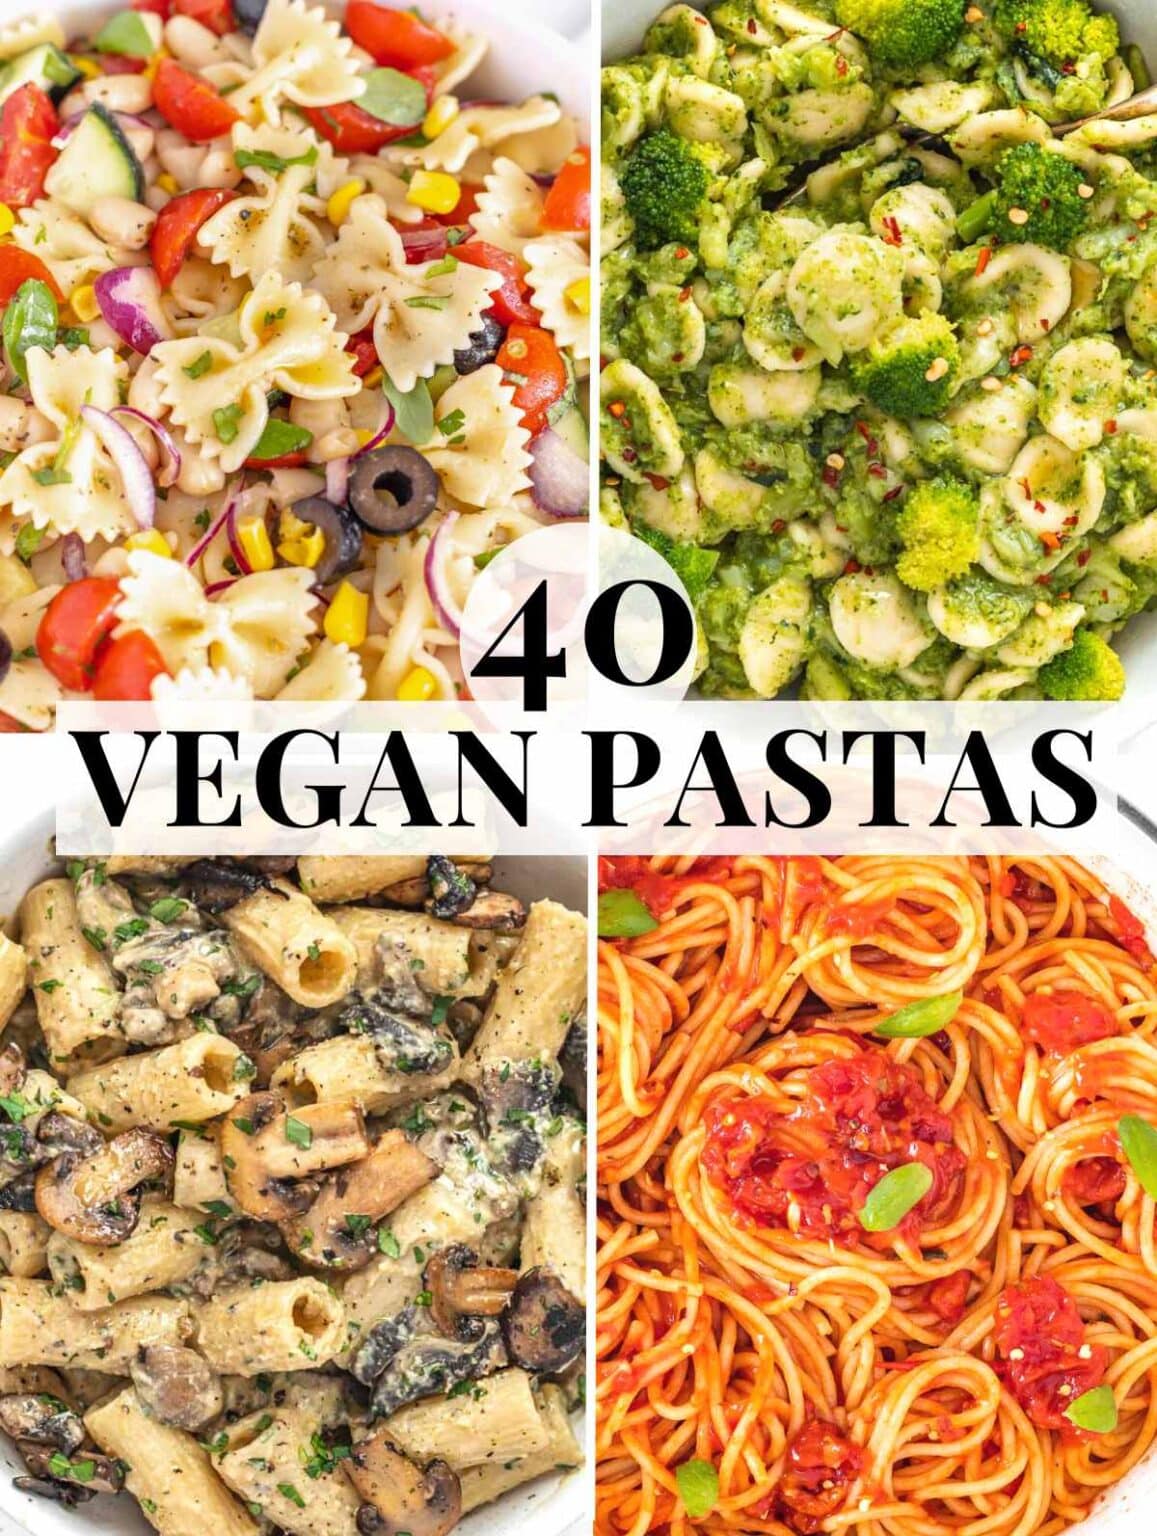 40 Vegan Pasta Recipes (Family-friendly) - The Plant Based School